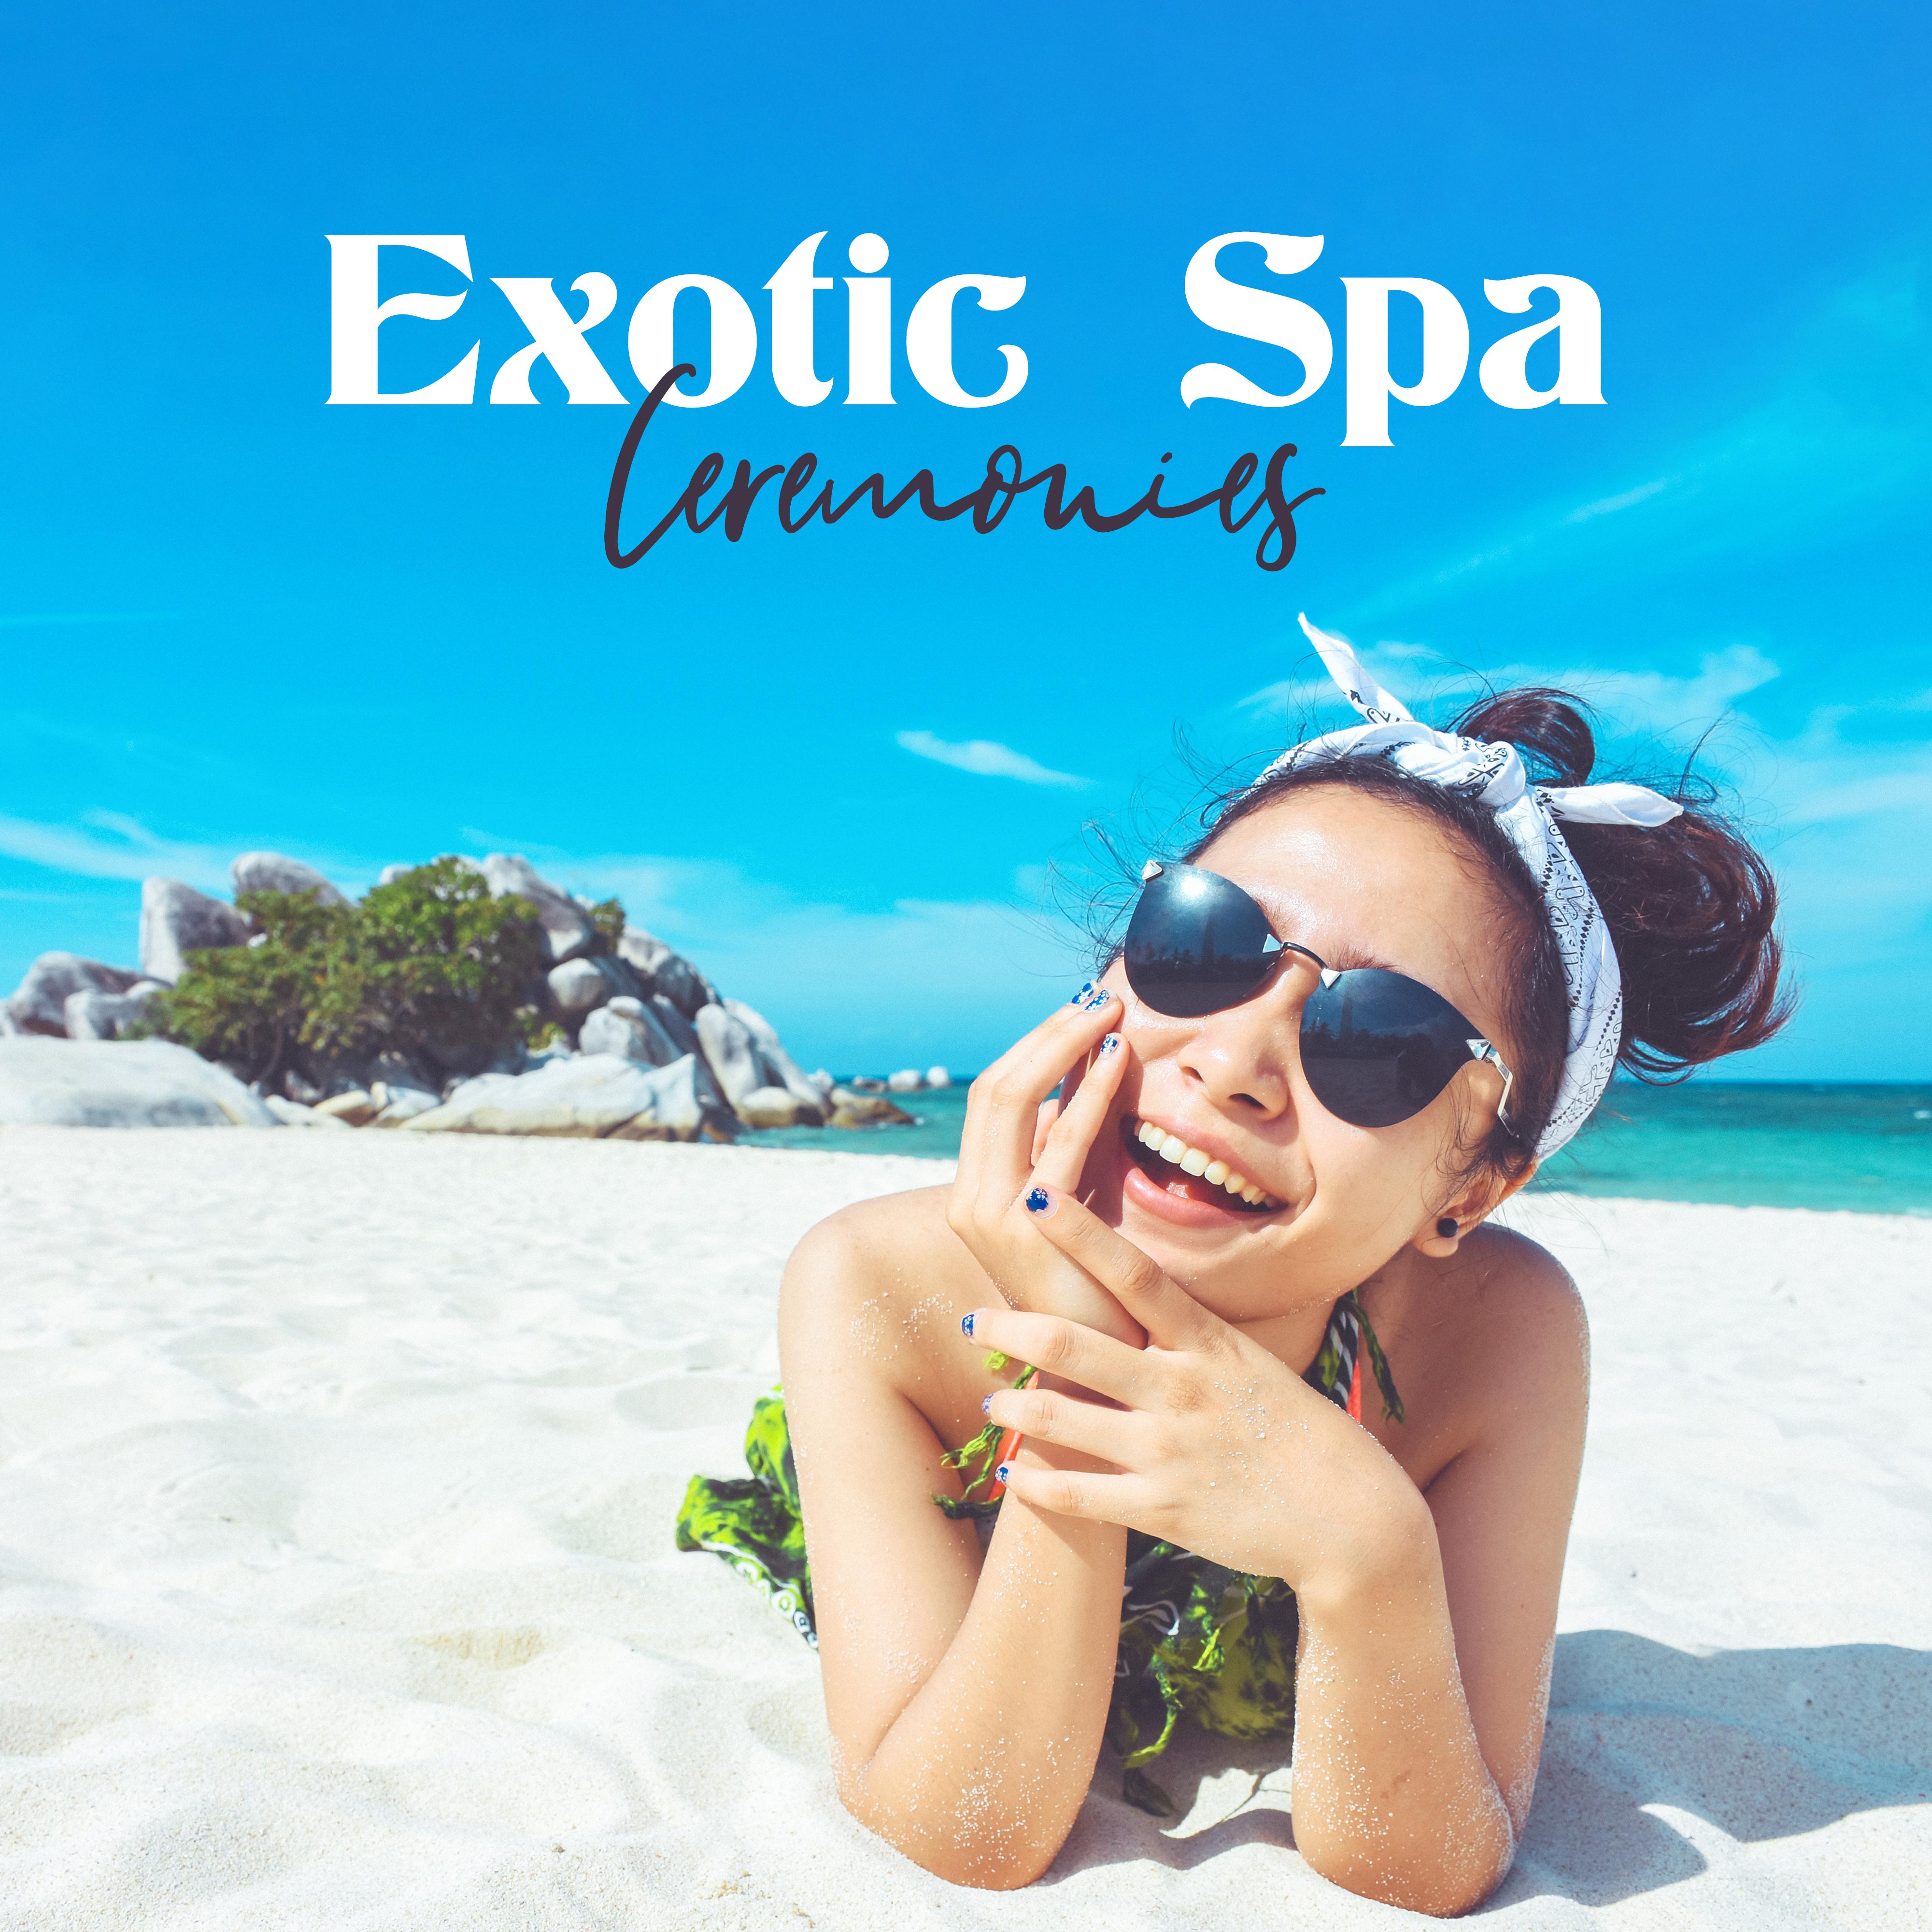 Exotic Spa Ceremonies: Music for Massage, Spa, Peeling, Reflexology, Stimulating, Energizing and Relaxing Treatments